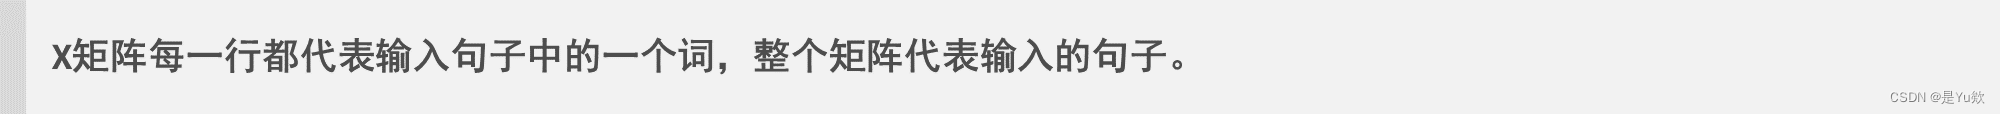 bert中文文本摘要代码（2）_python_12